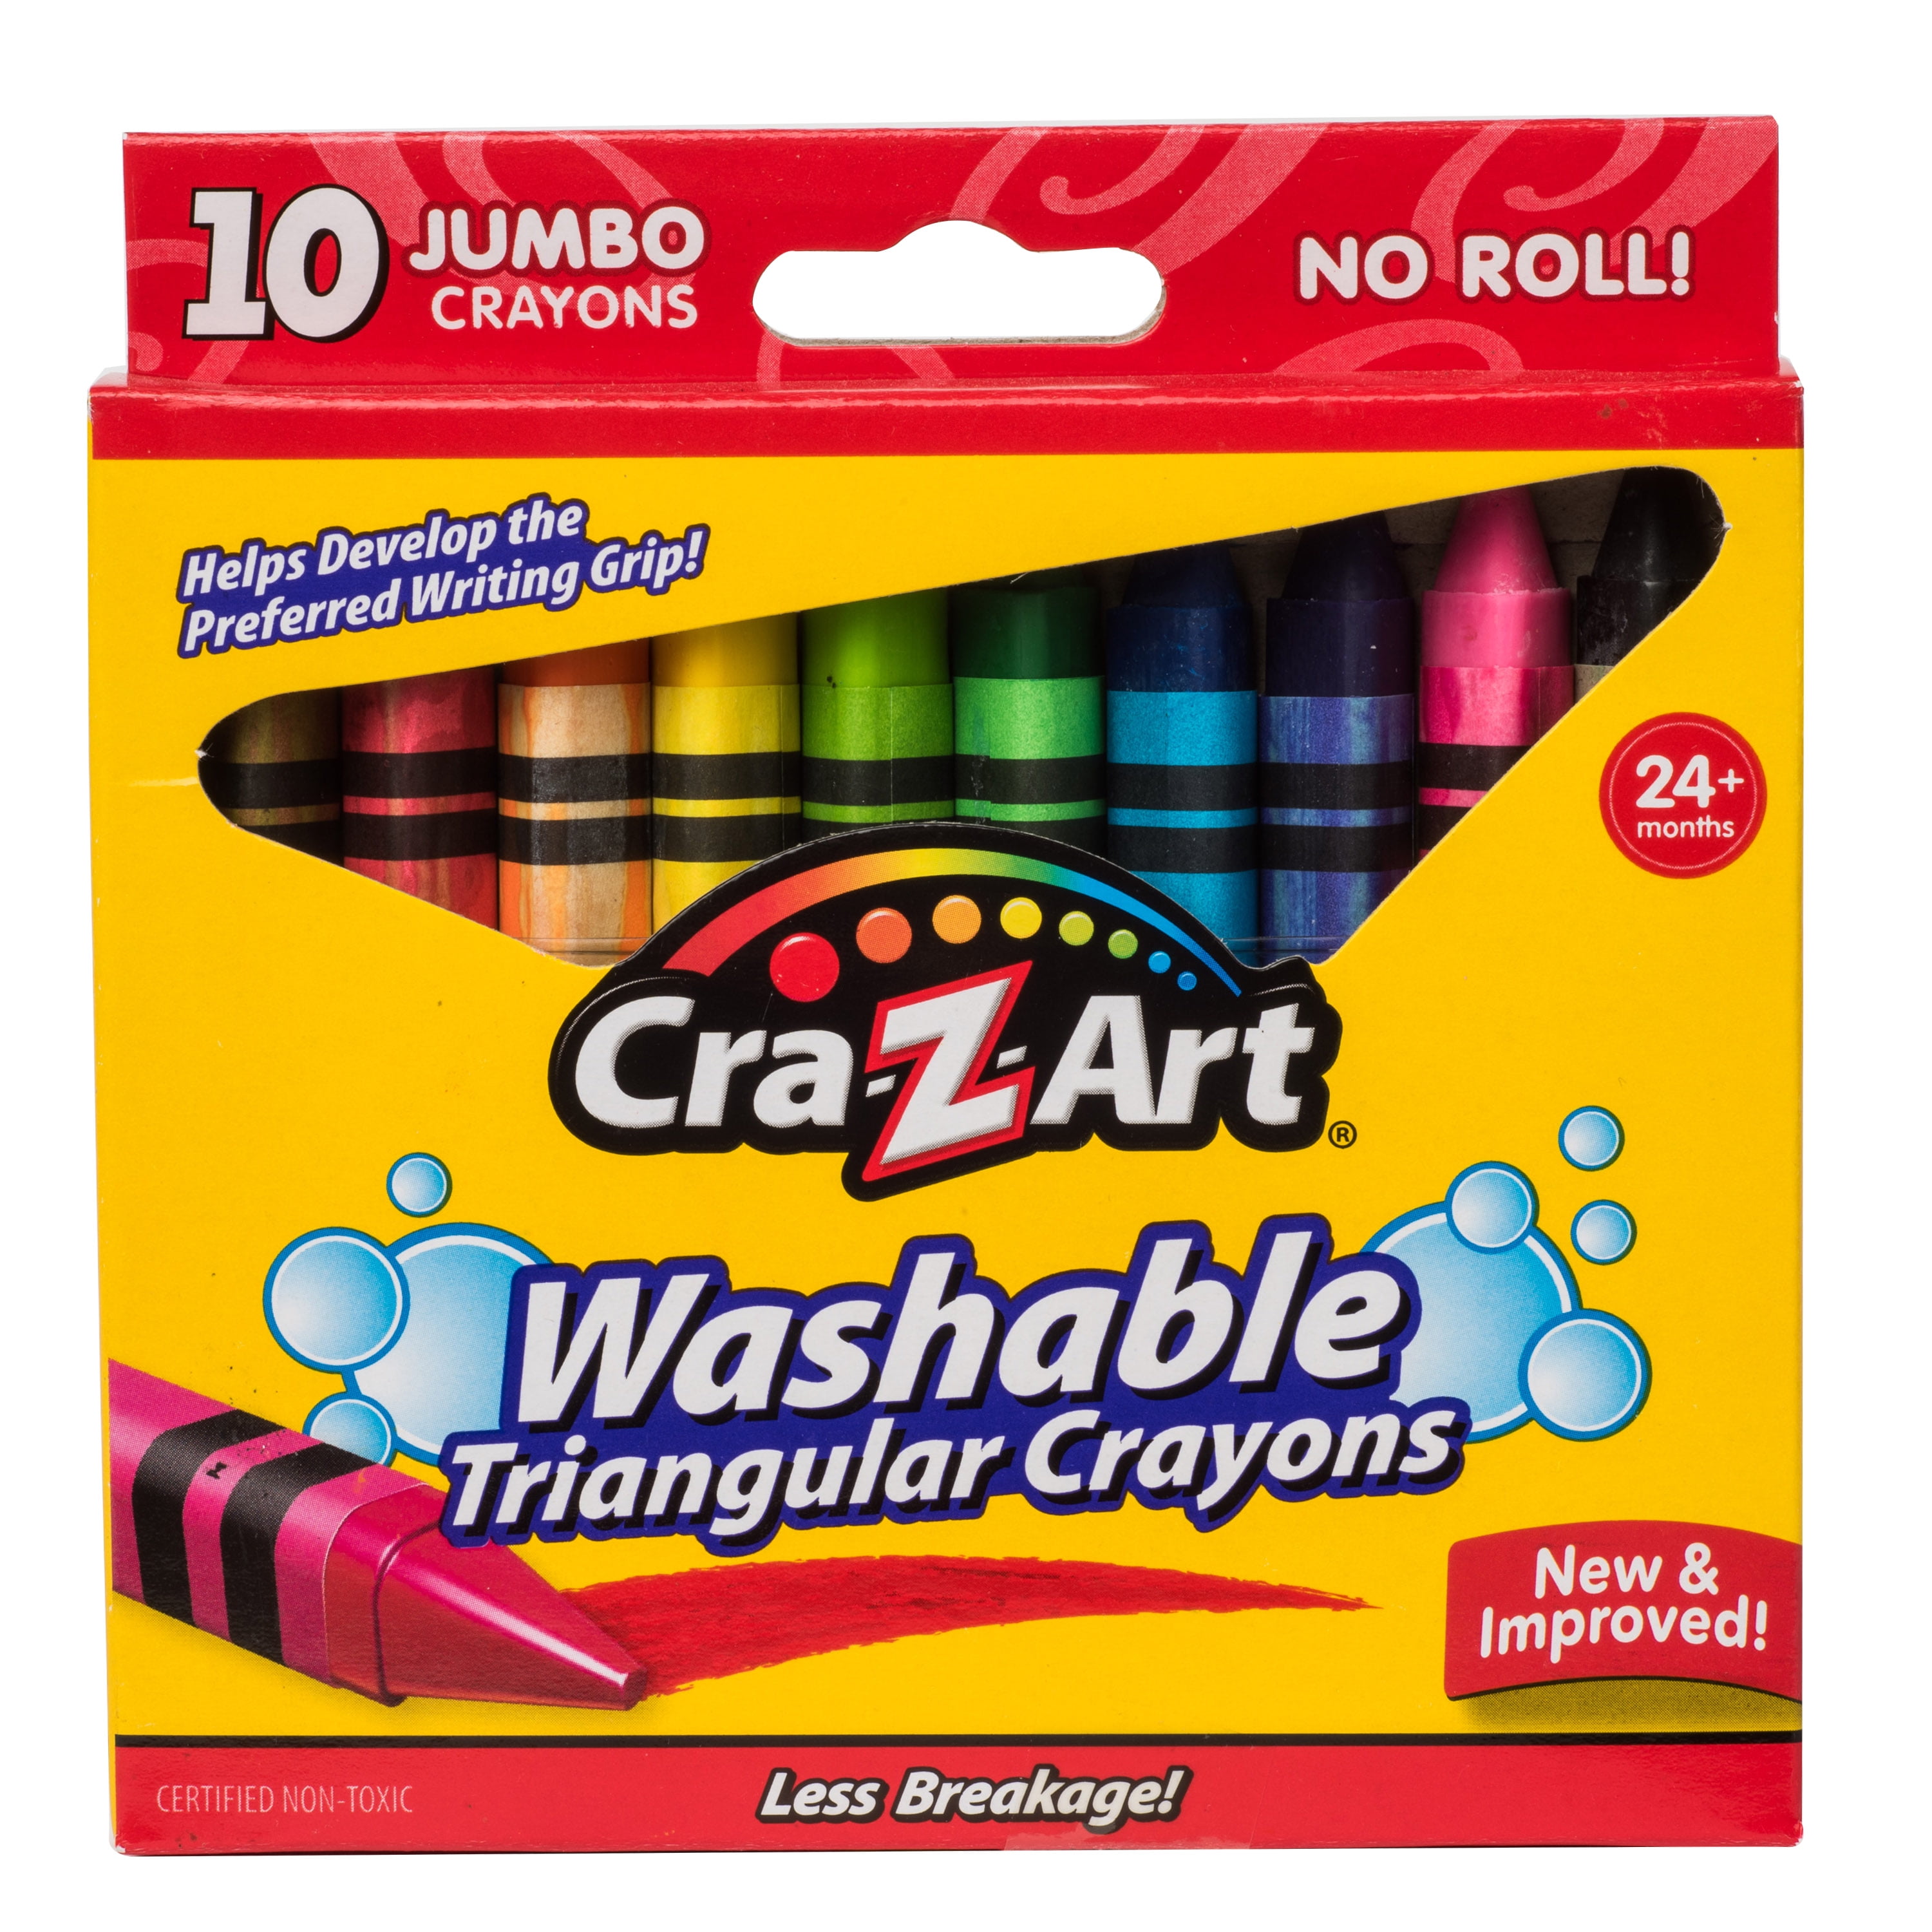 Bulk School Supplies Crayola Mini Twistables Crayons CYO529724